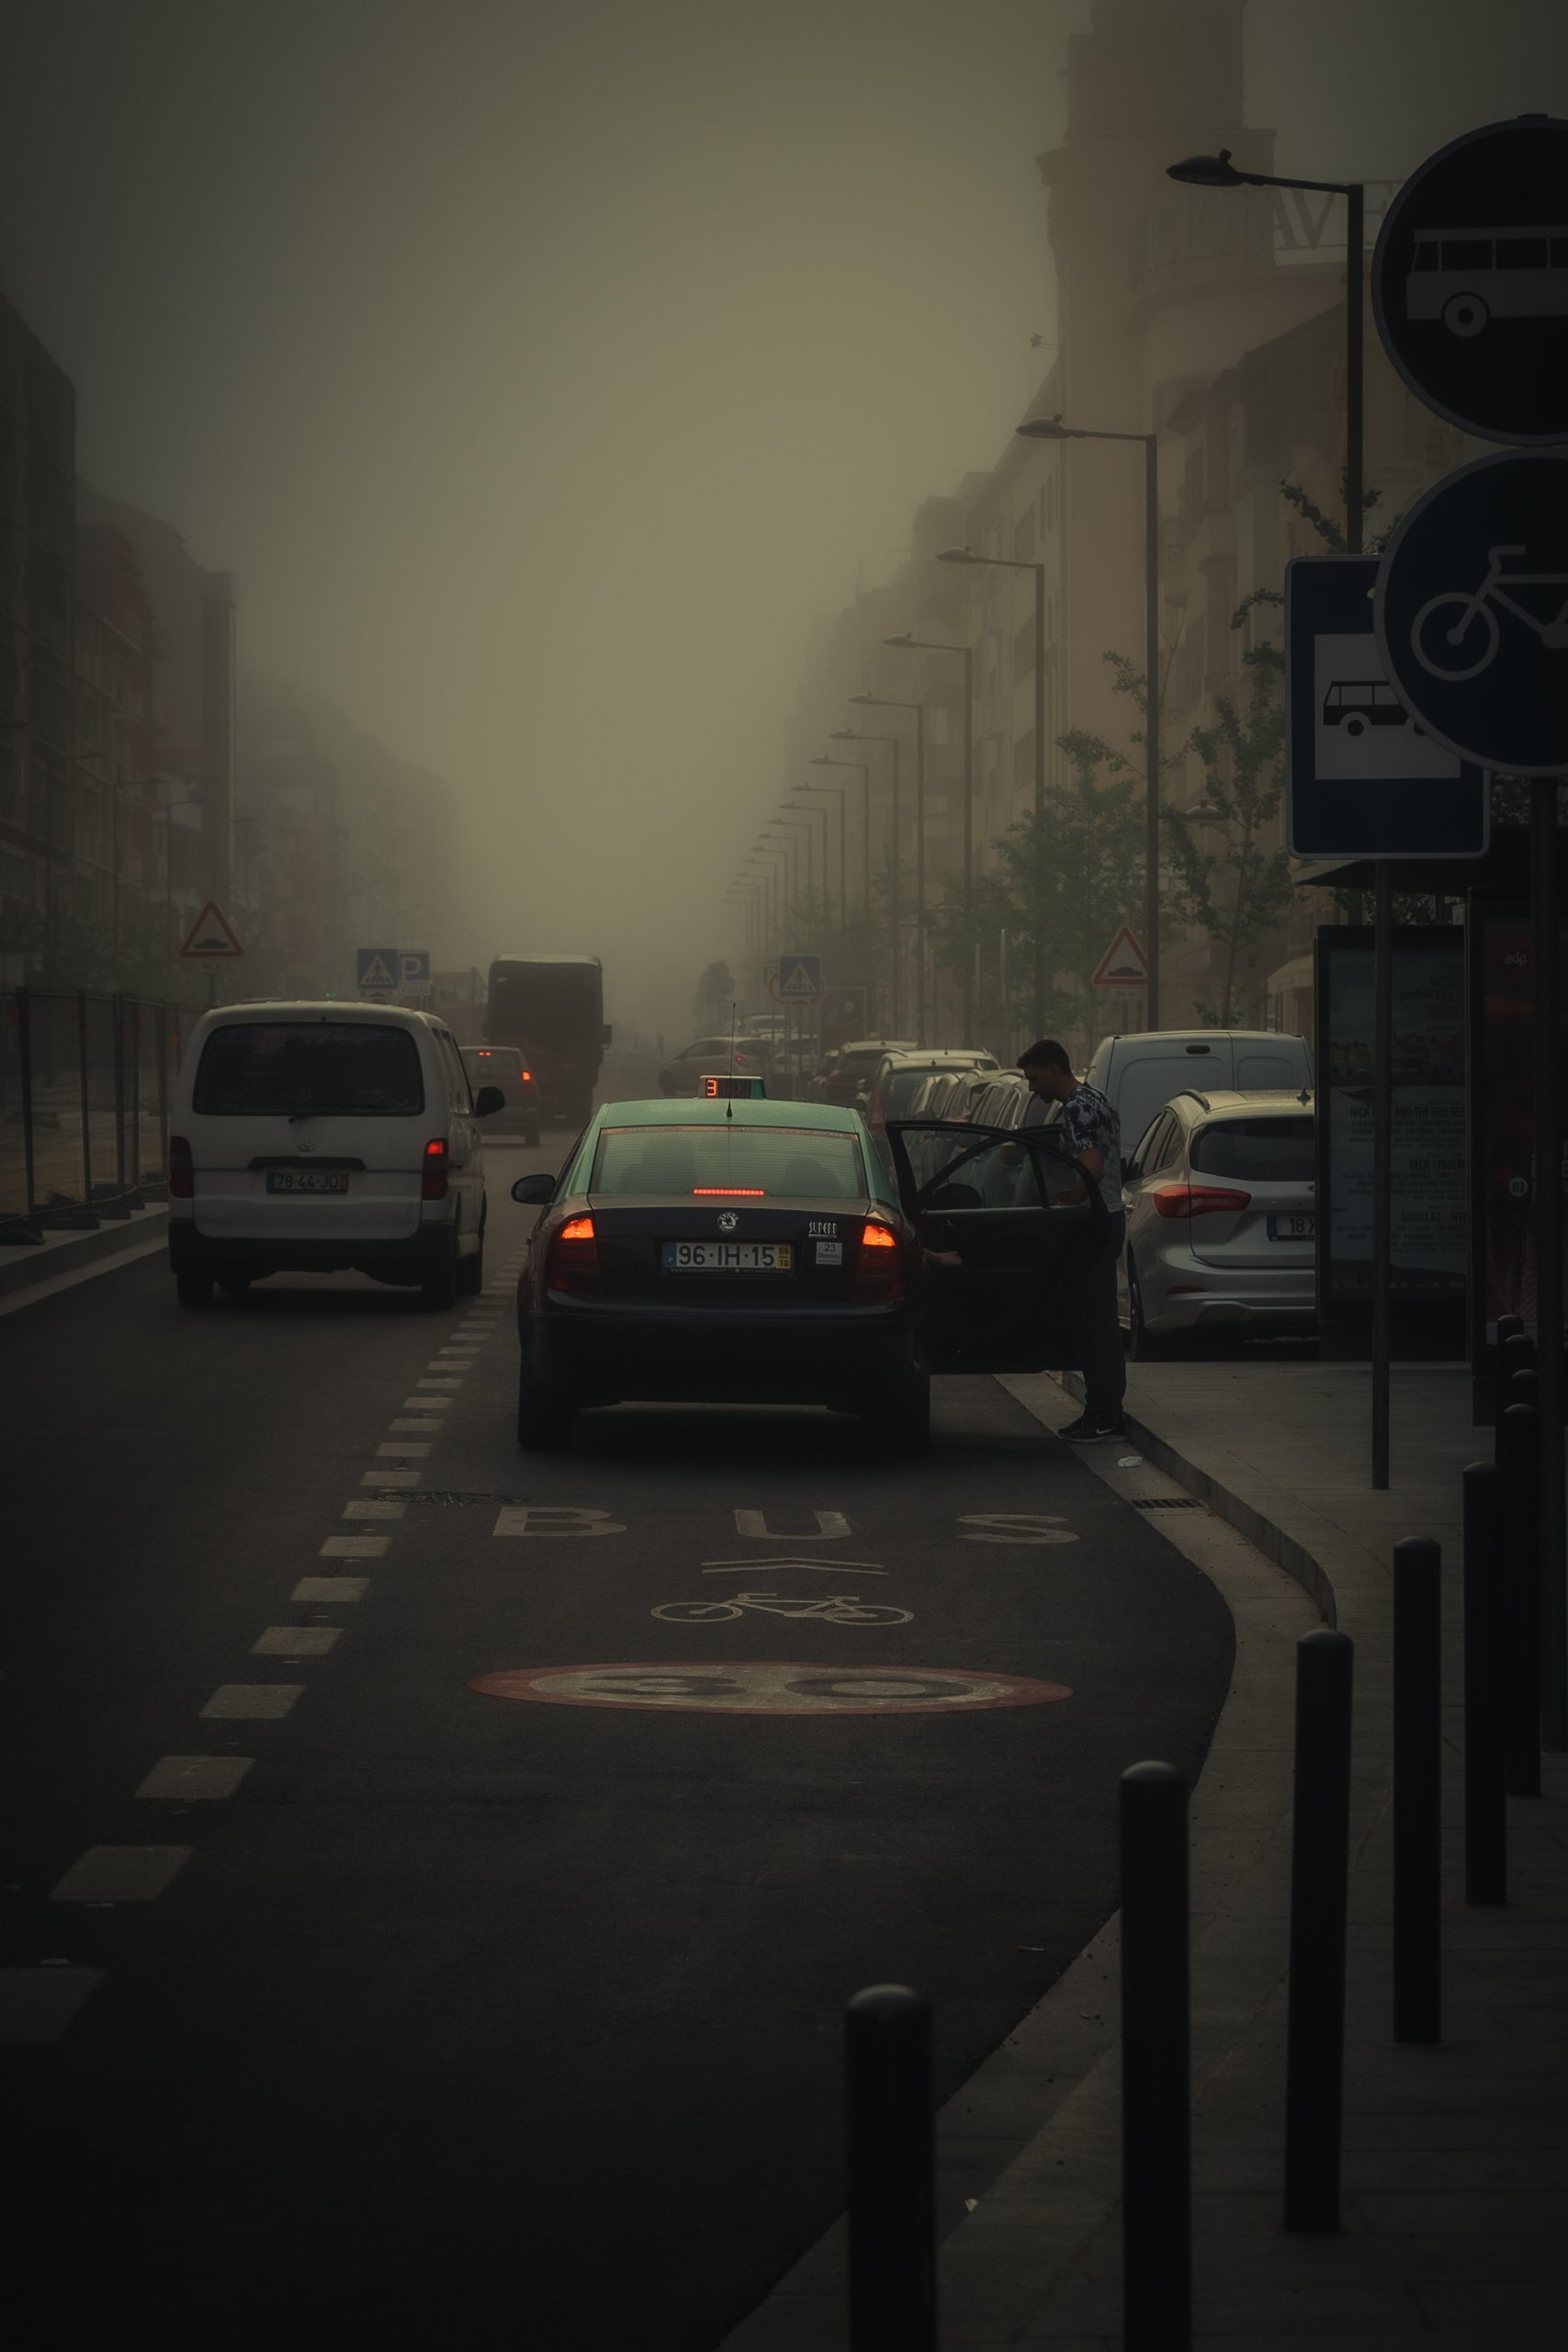 rue avec brouillard de pollution et voitures